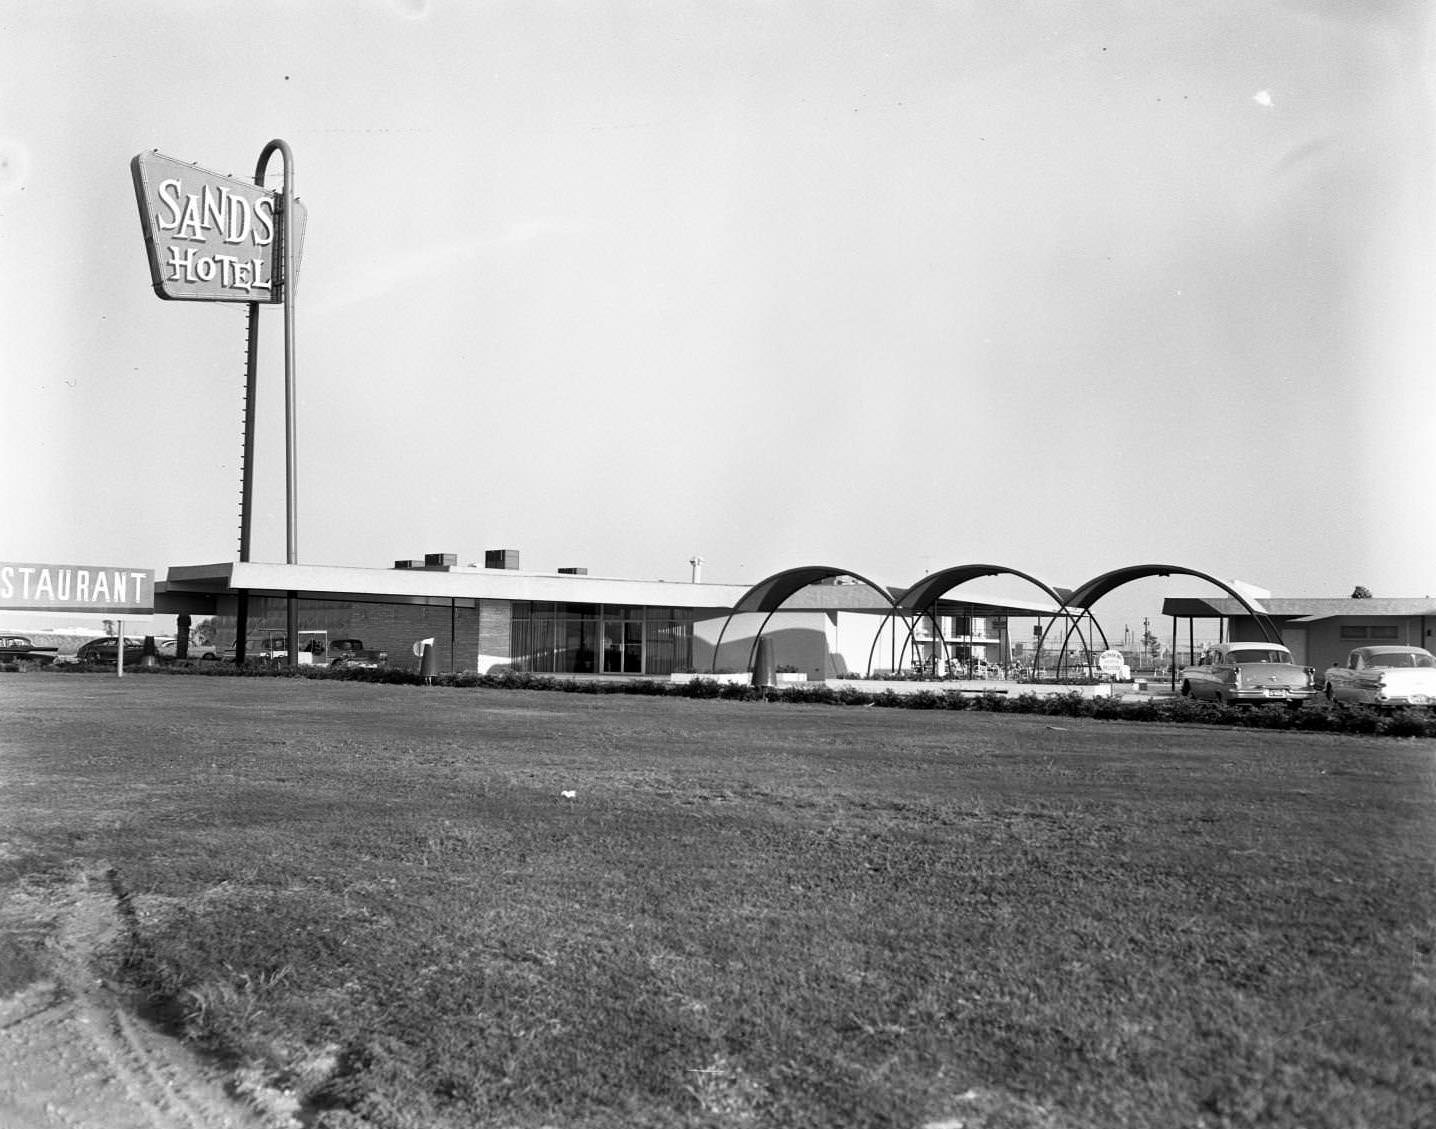 The Sands Hotel in Abilene, 1957